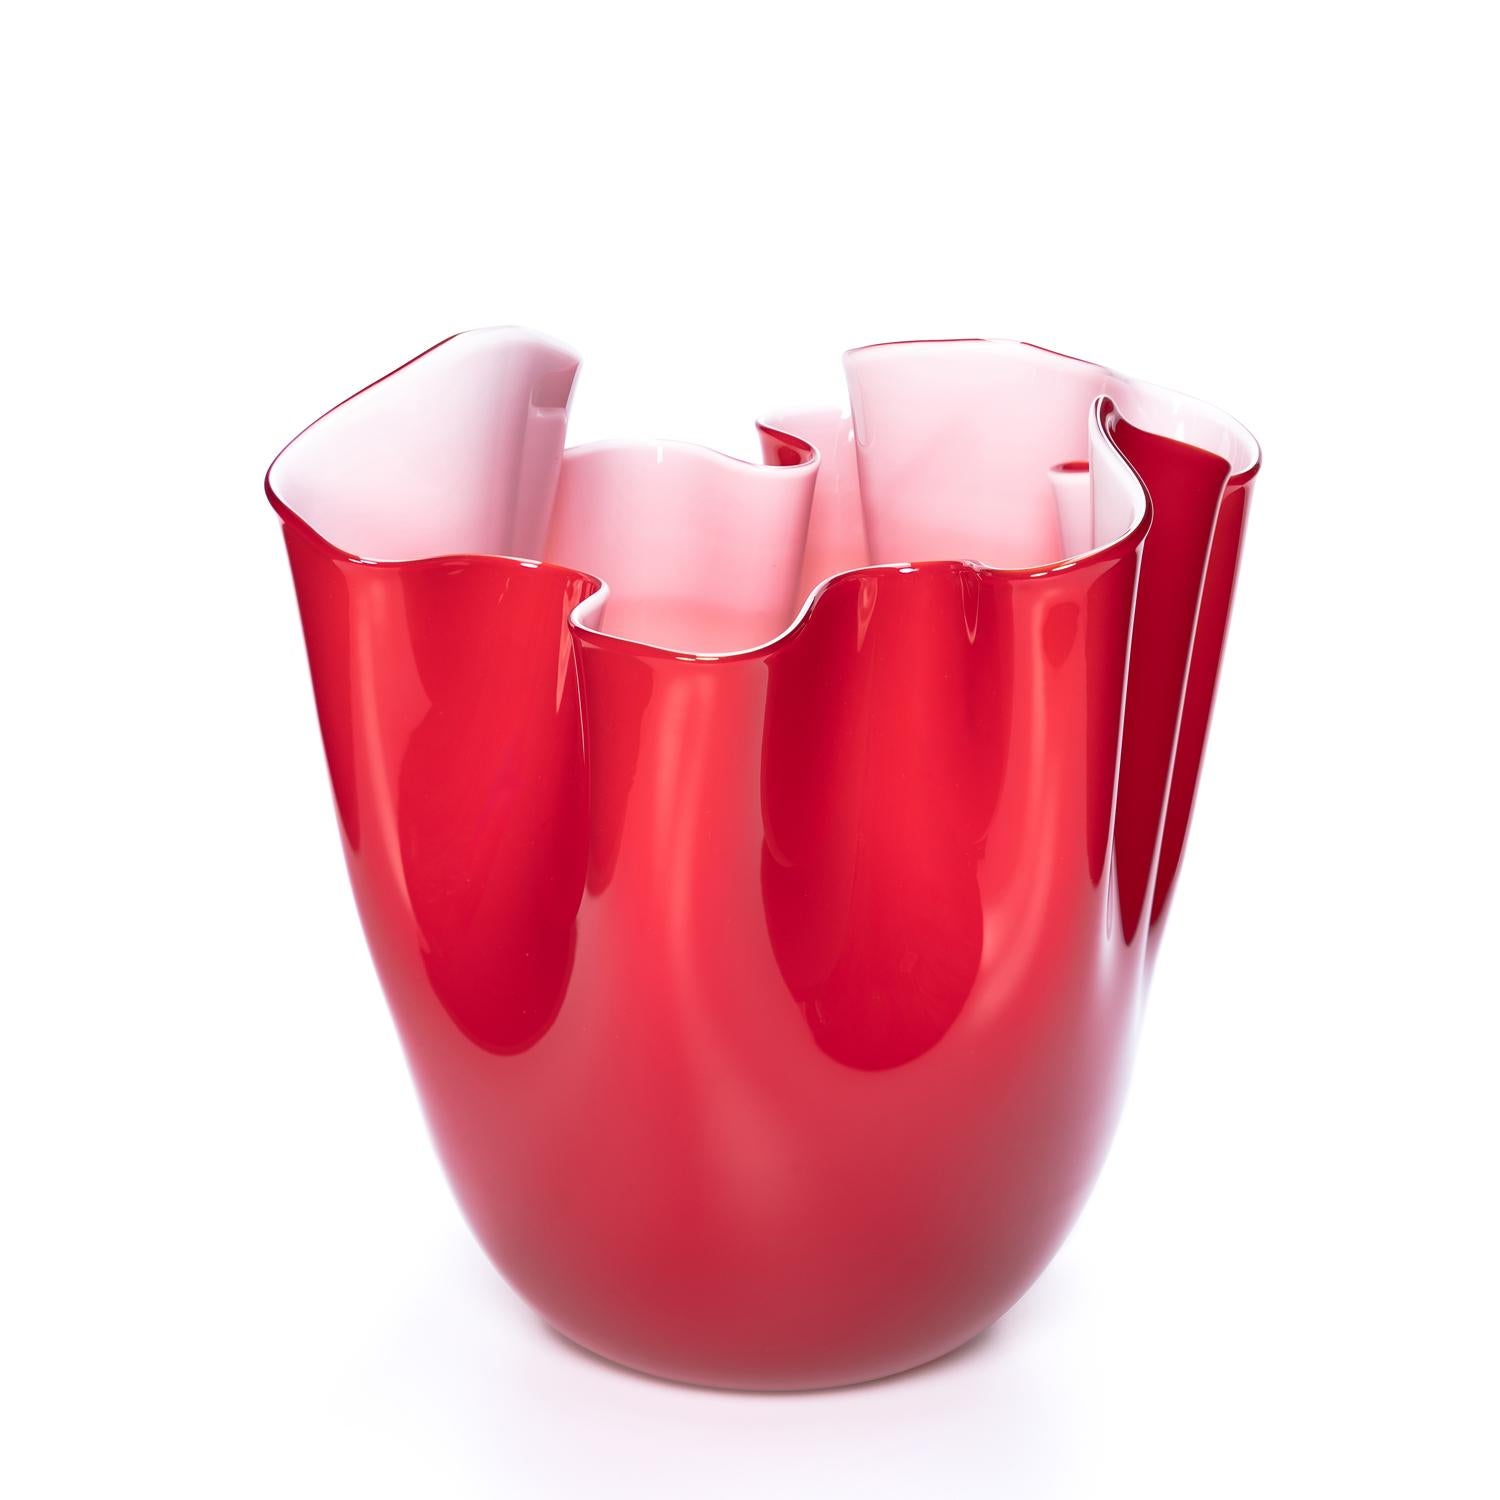 1295 Murano Handmade Glass Art Vase Red & White Foulard In New Condition For Sale In Venice, VE